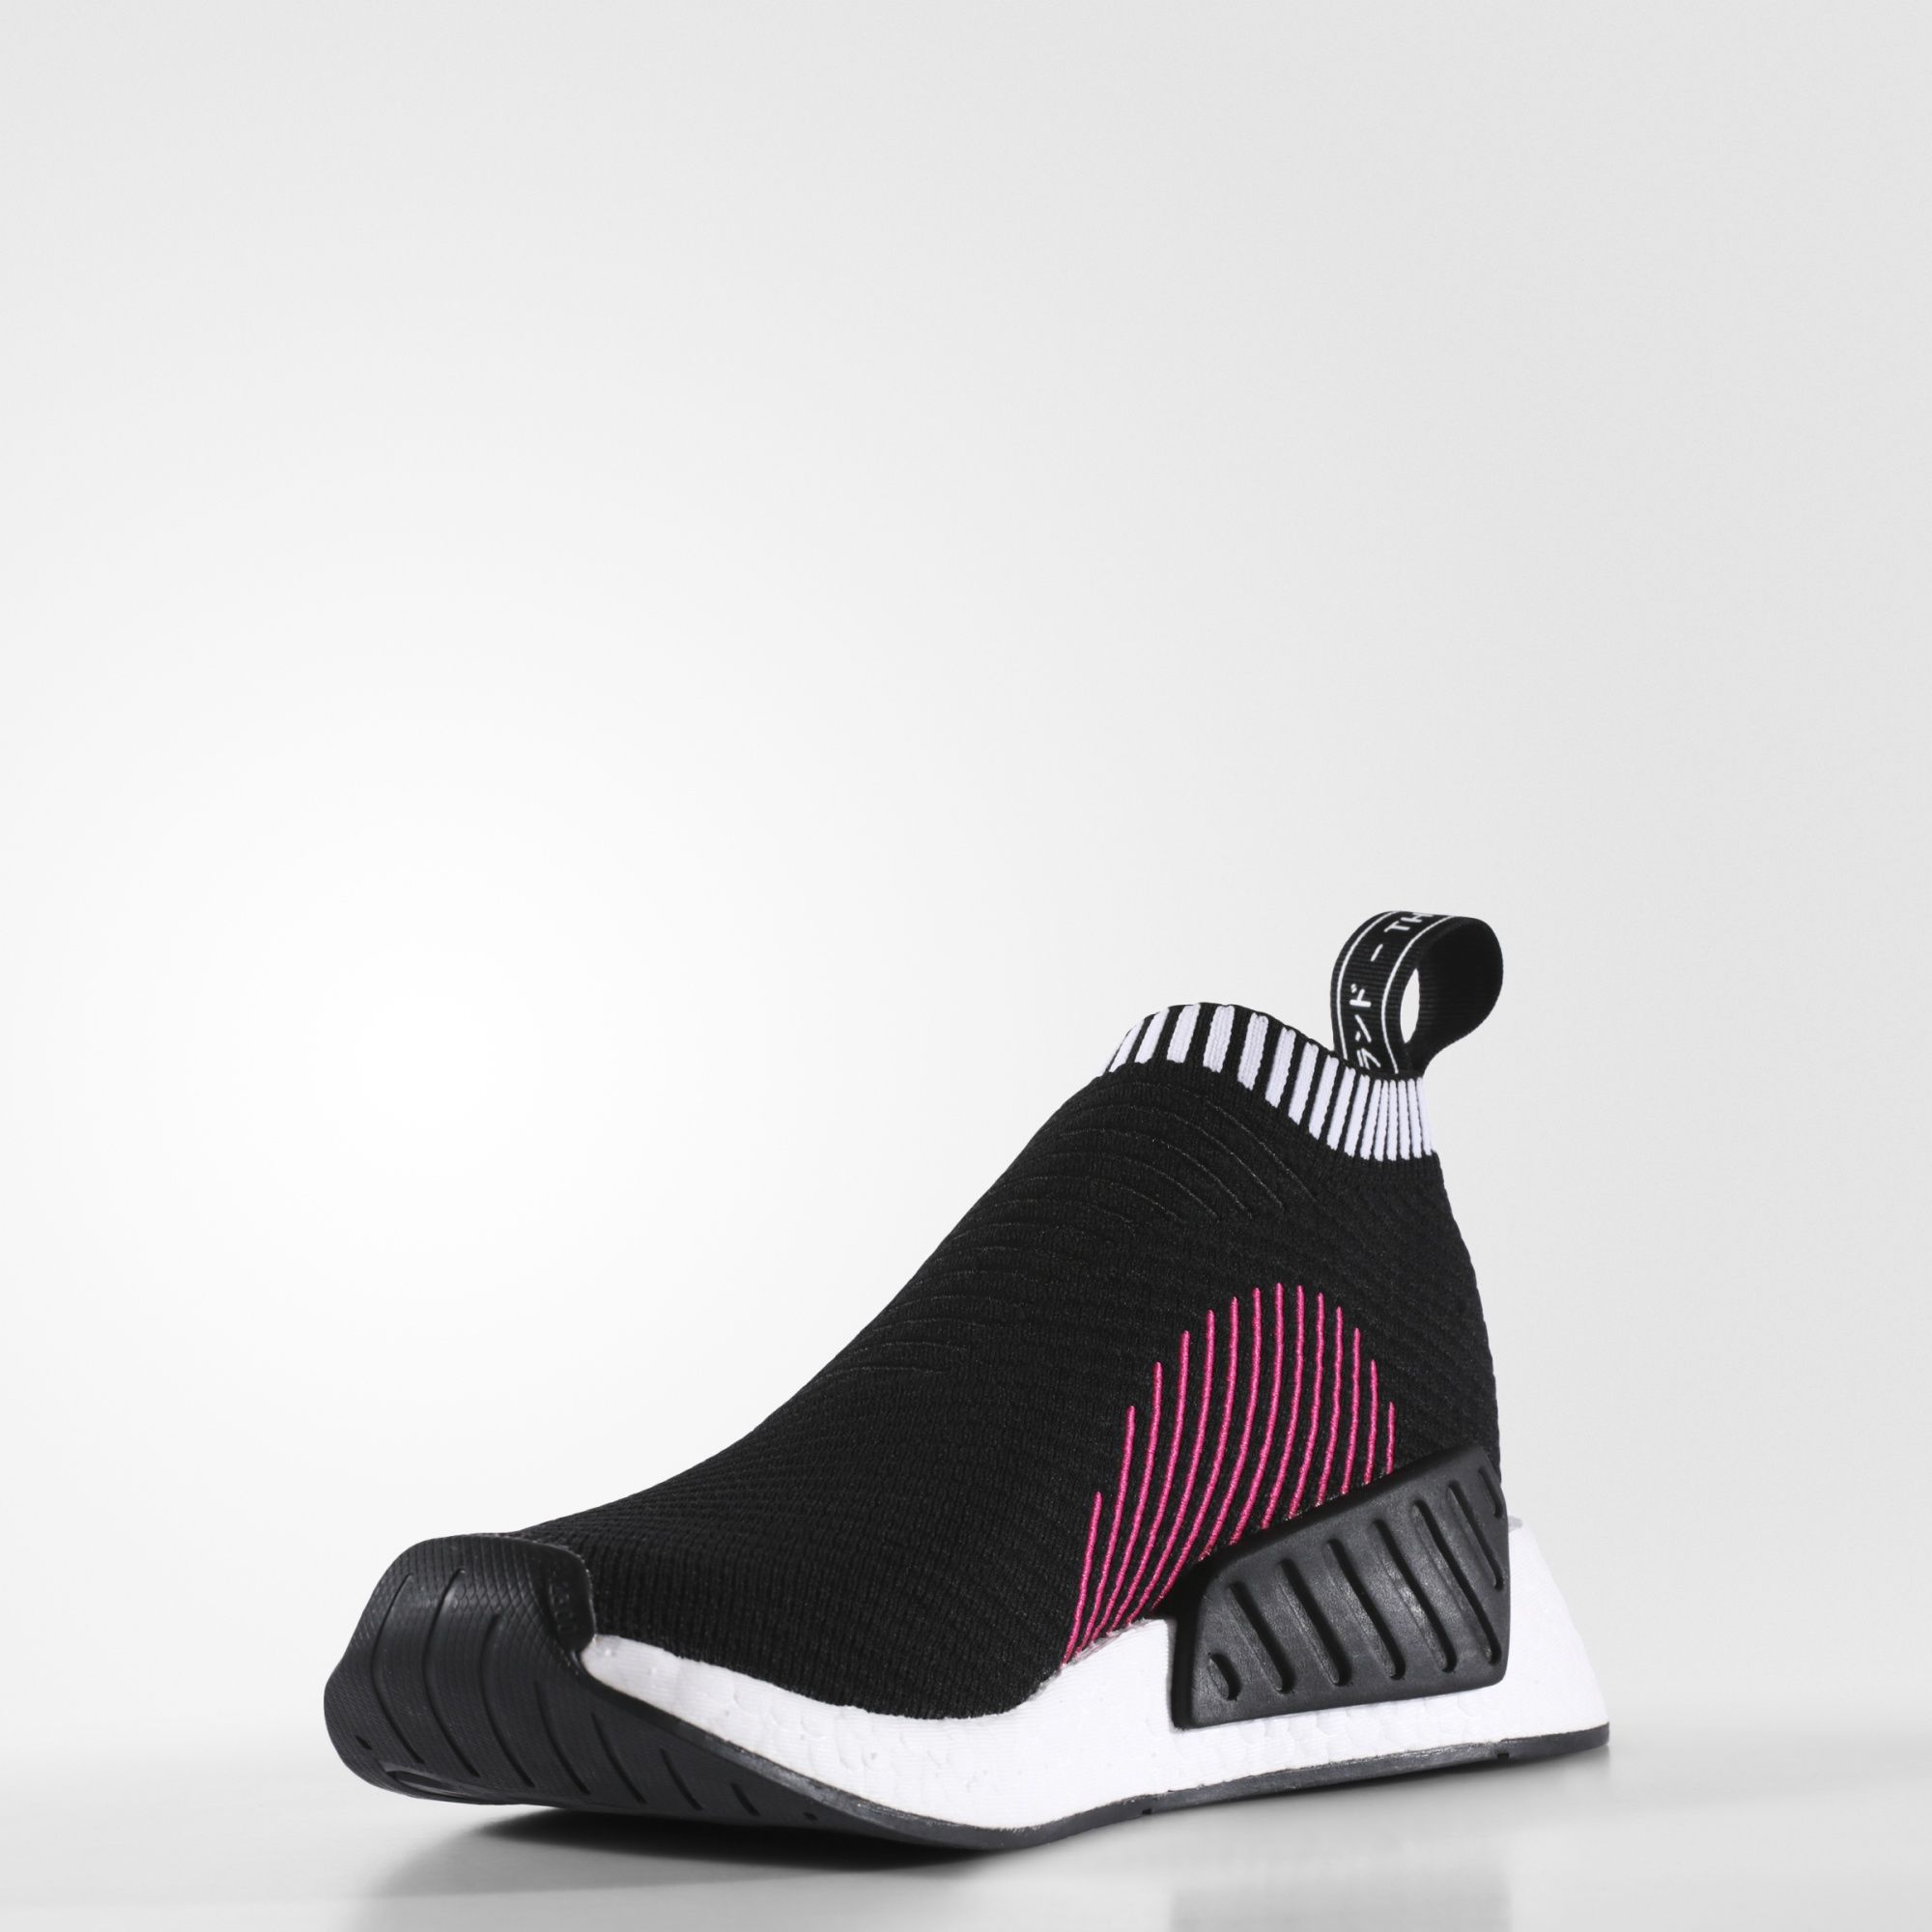 Adidas NMD_CS2 Primeknit
Core Black / Shock Pink